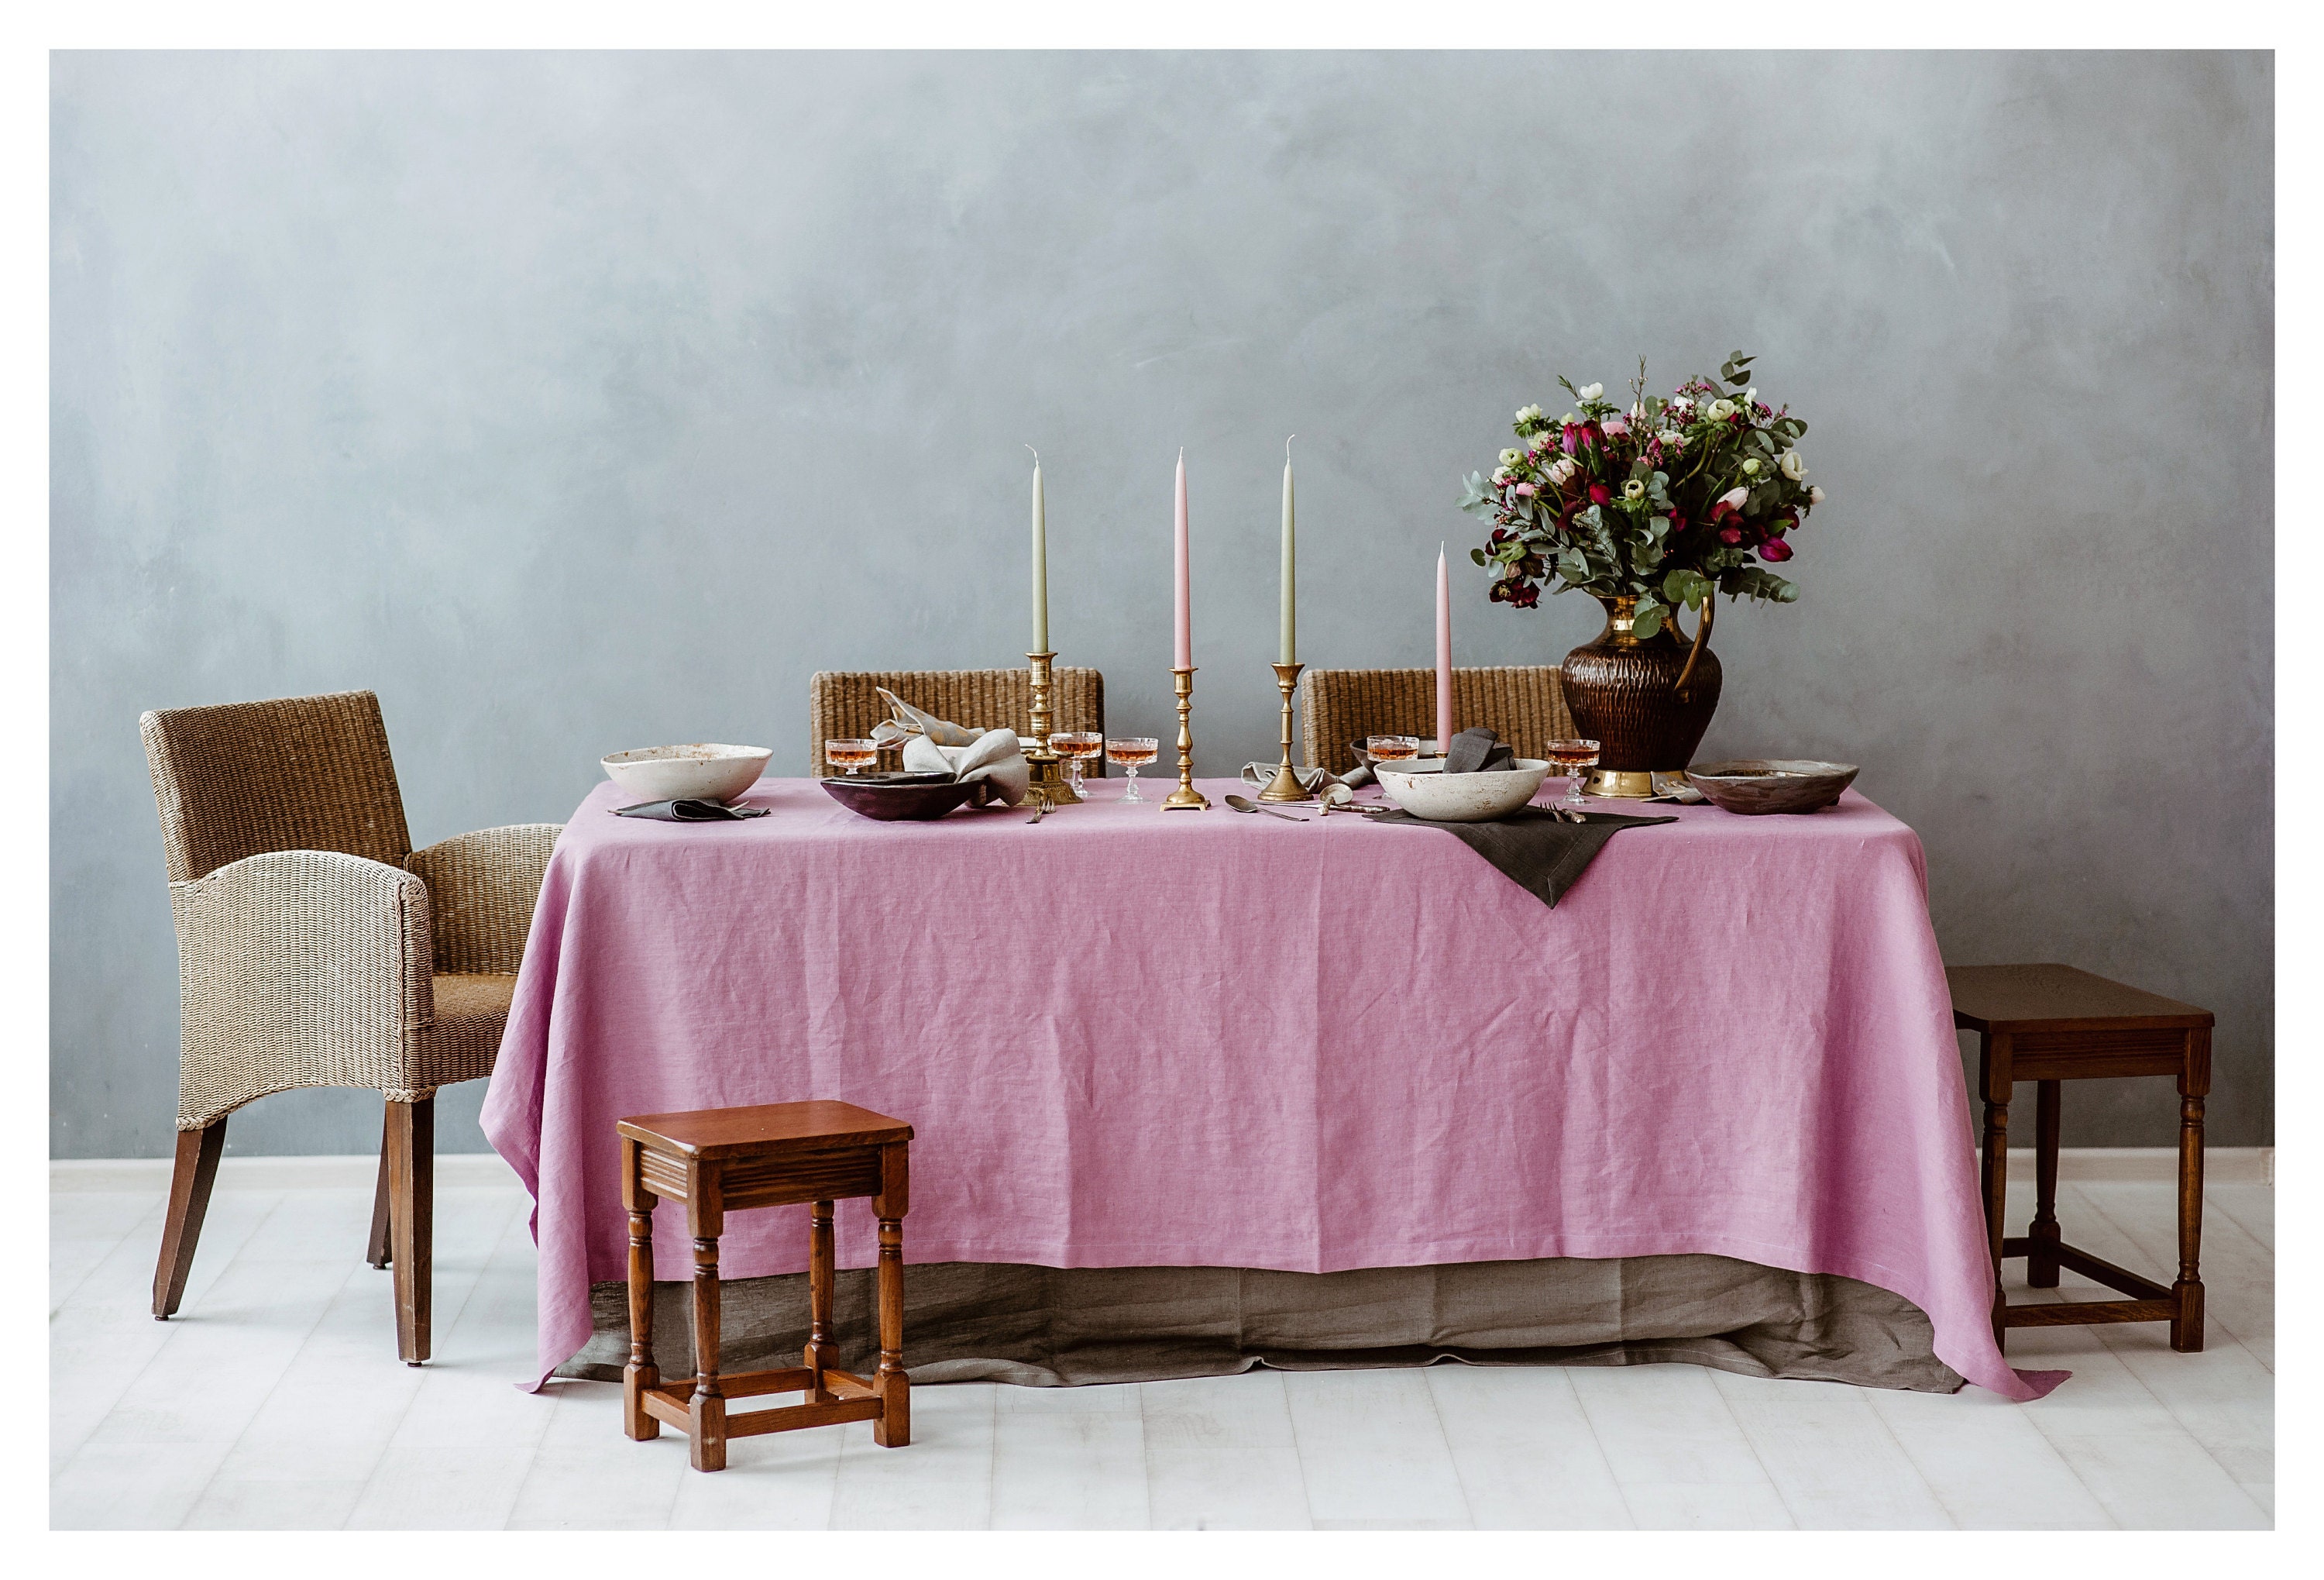 https://www.etsy.com/listing/263791016/pink-linen-tablecloth-lavender-pink?ref=shop_home_active_2